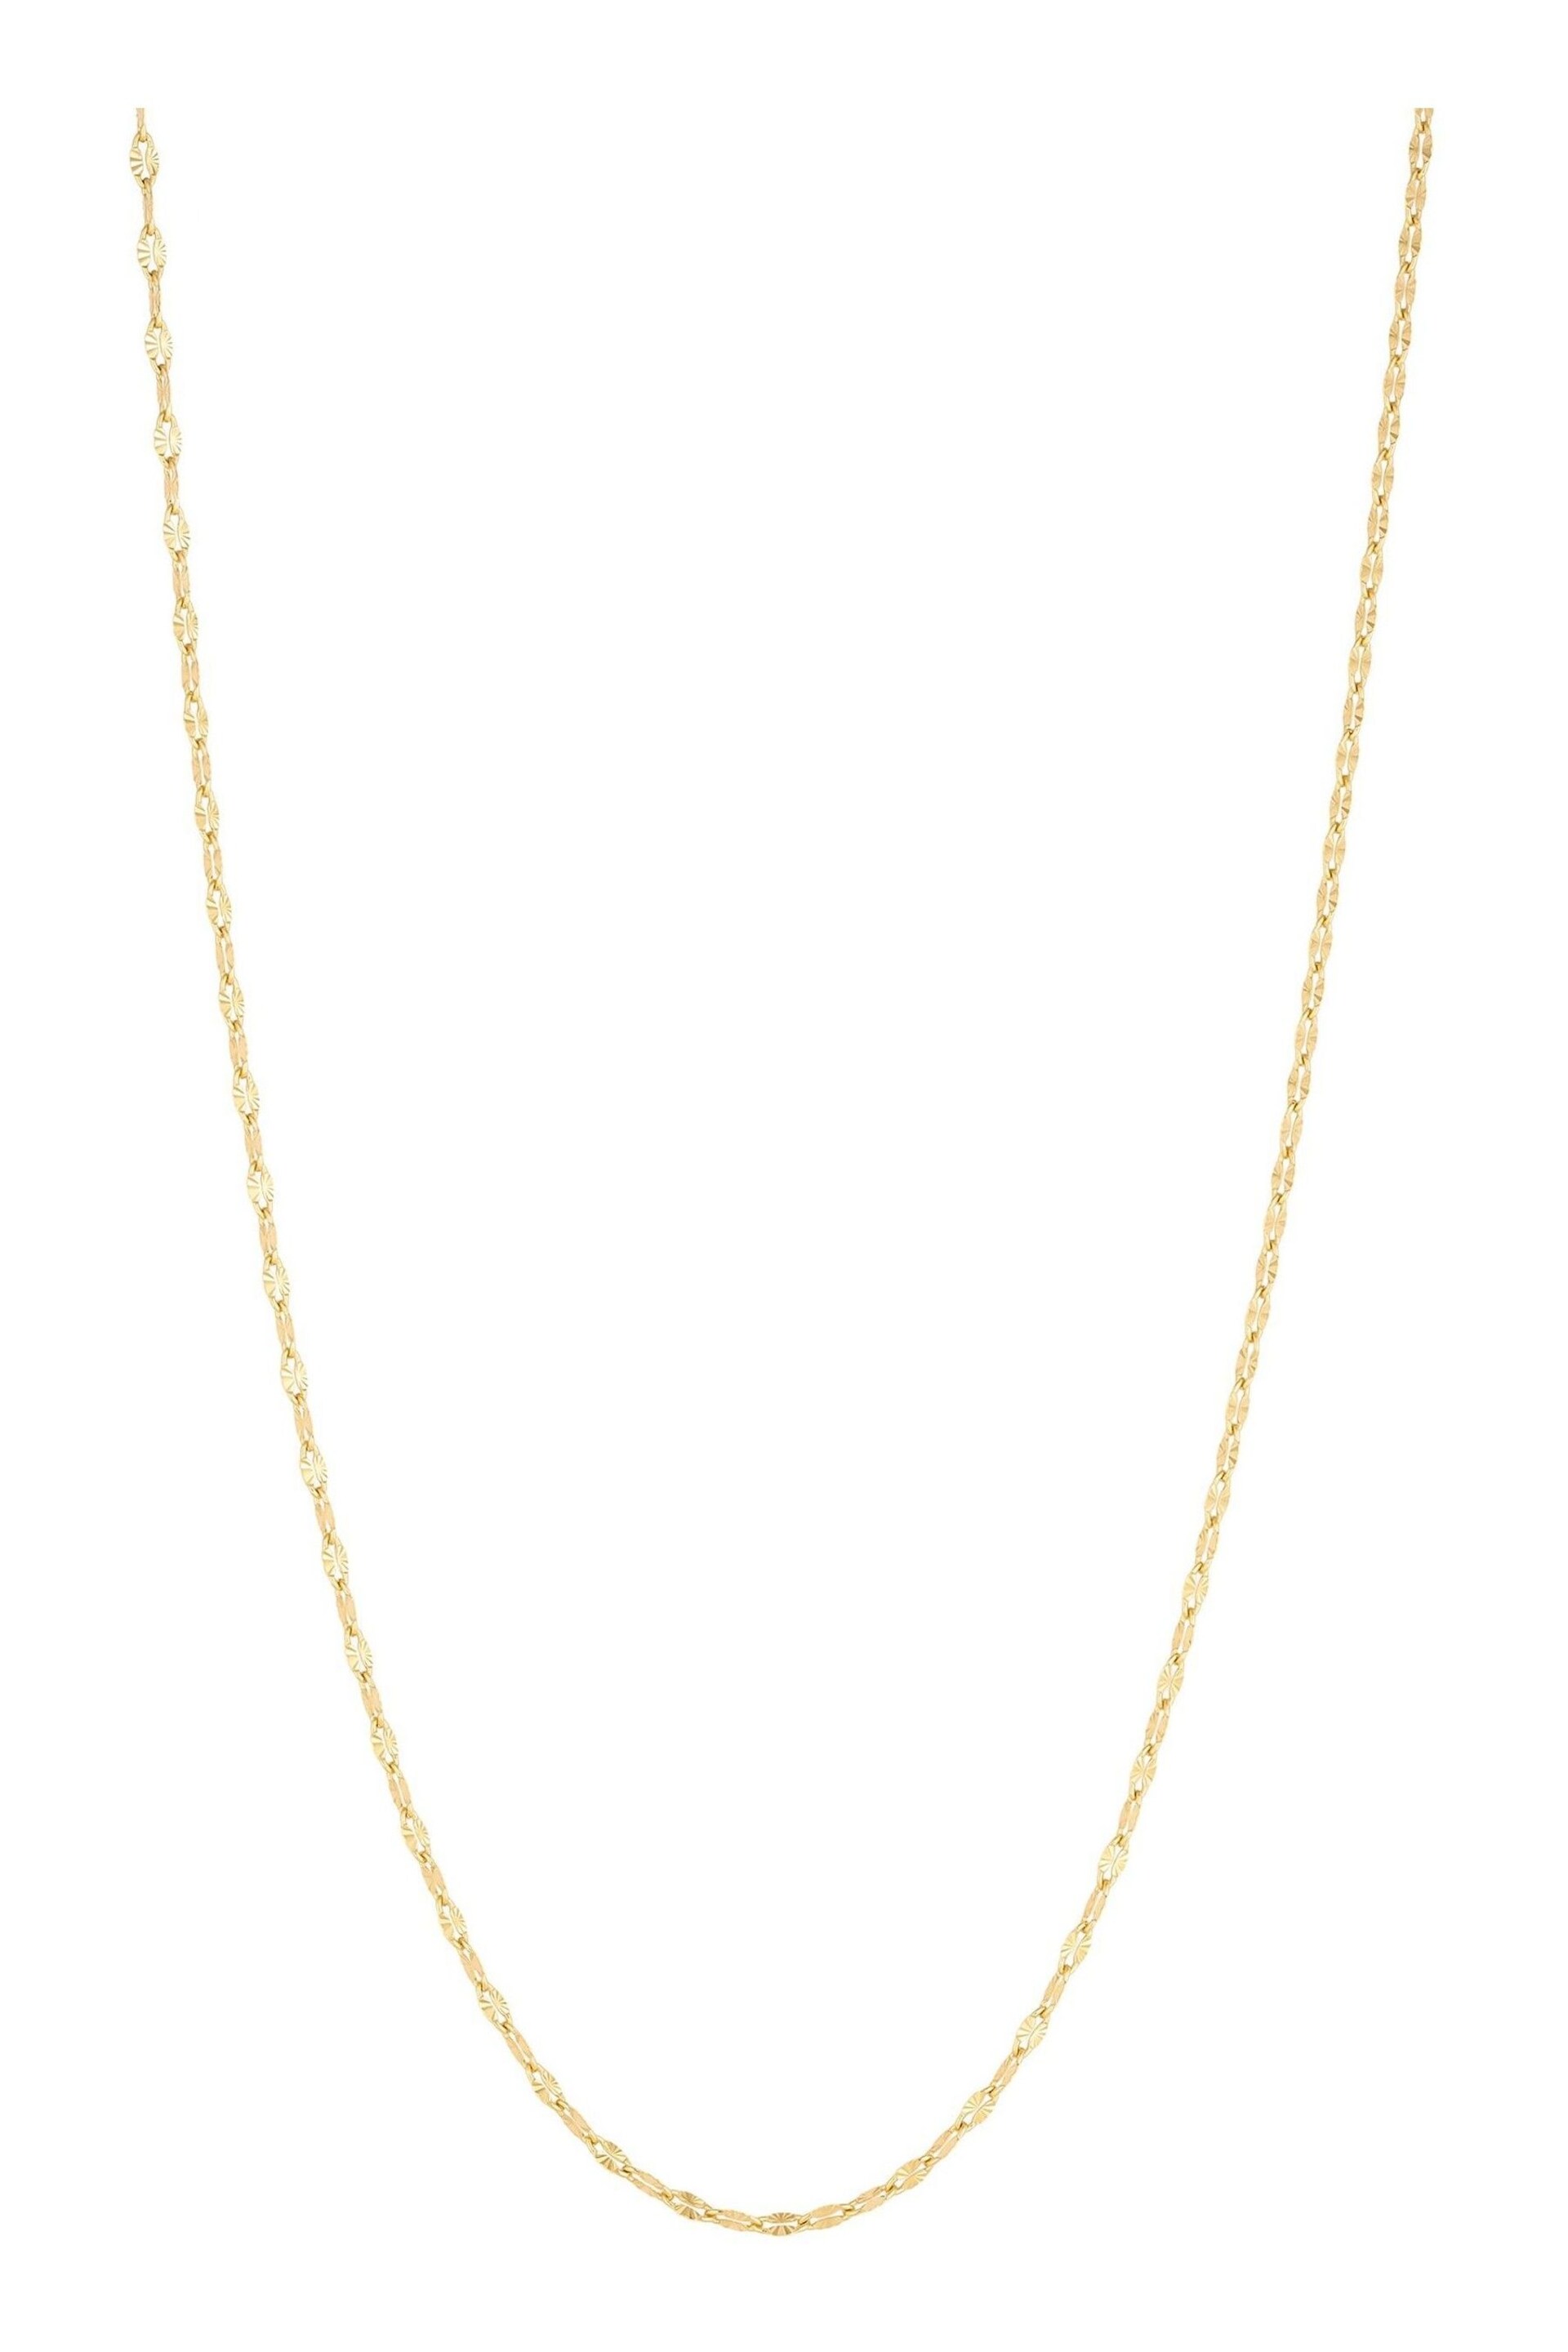 Inicio Gold Tone Gift Pouch Diamond Cut Chain Necklace - Image 1 of 2